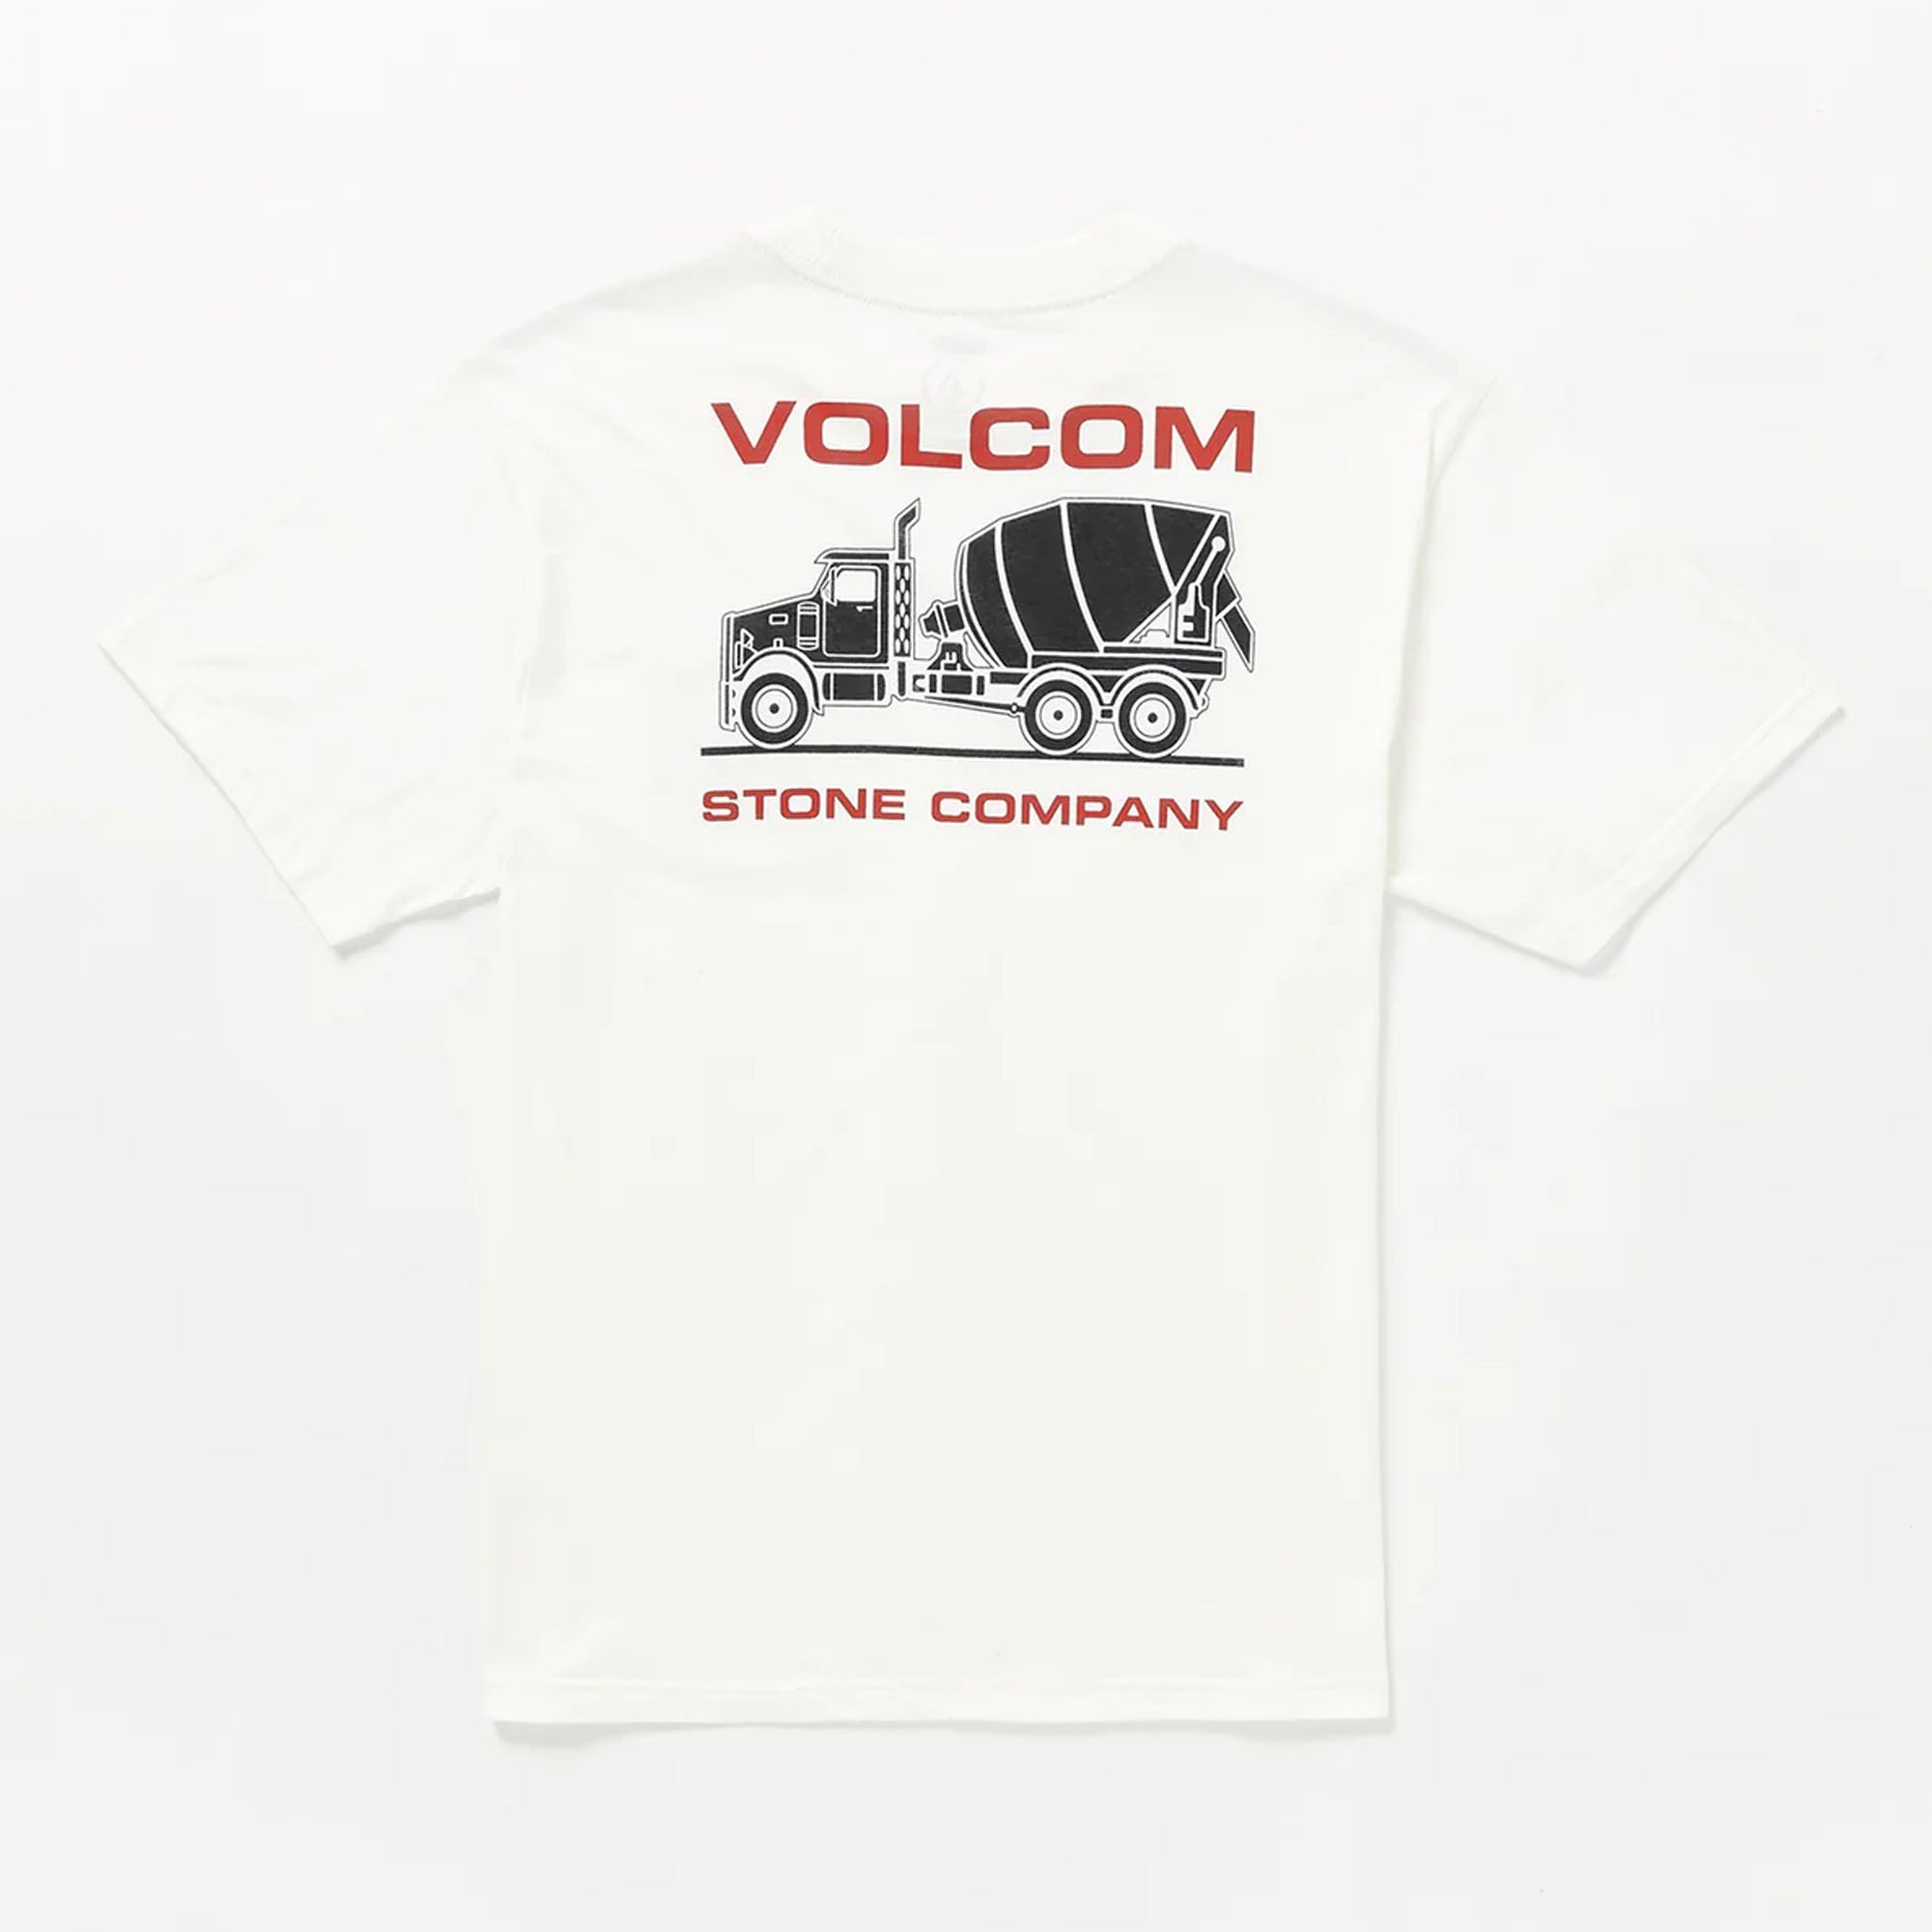 Volcom Skate Vitals Grant Taylor Men's S/S T-Shirt